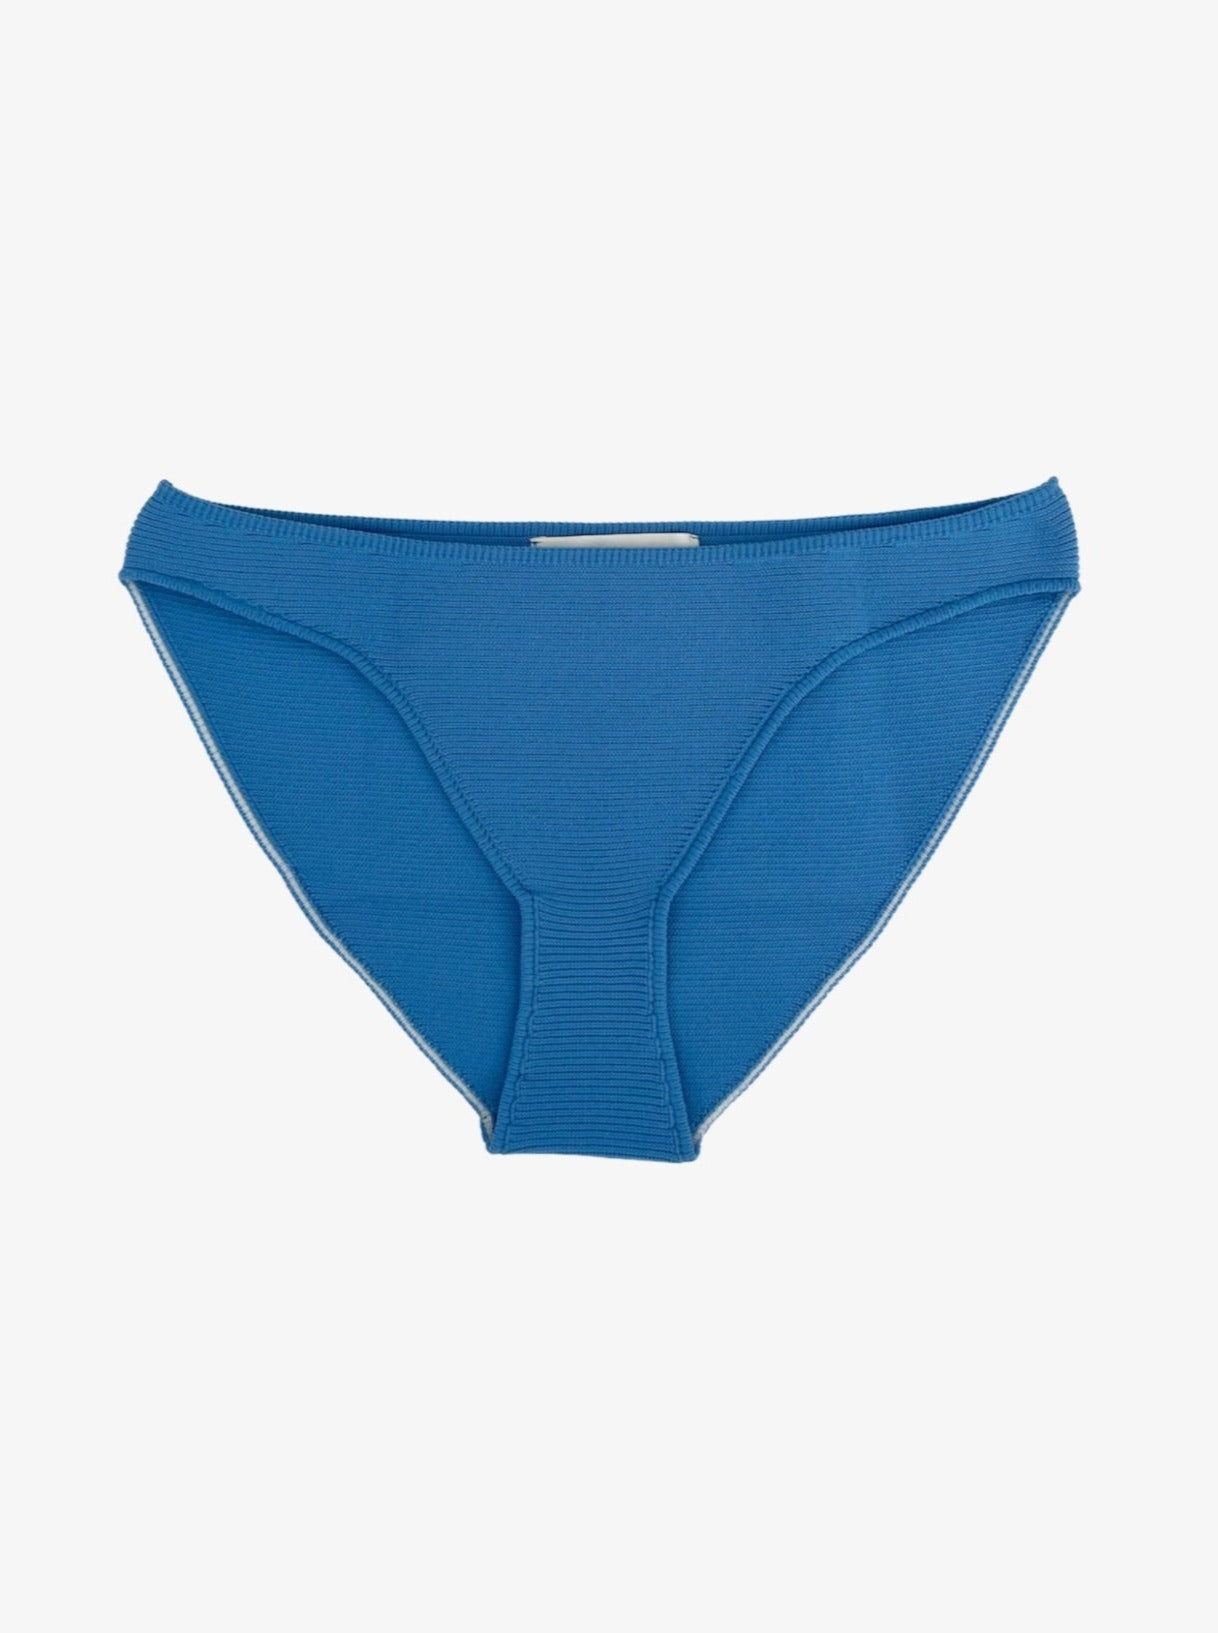 makaha pacific blue low rise bikini front view